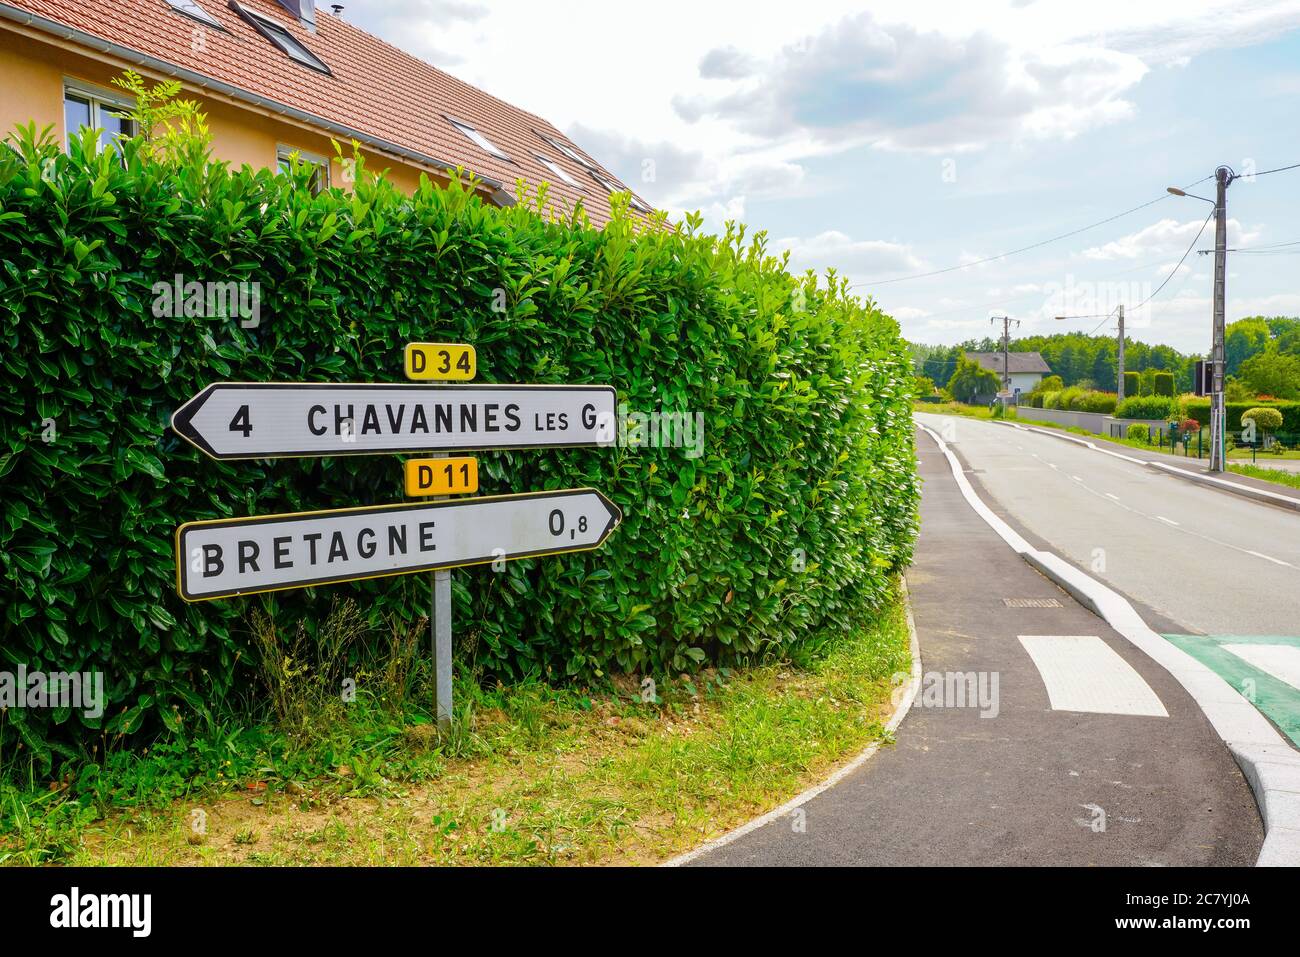 Road sign to village Bretagne. Bretagne is a commune in the Territoire de Belfort department in Bourgogne-Franche-Comté in northeastern France. Stock Photo